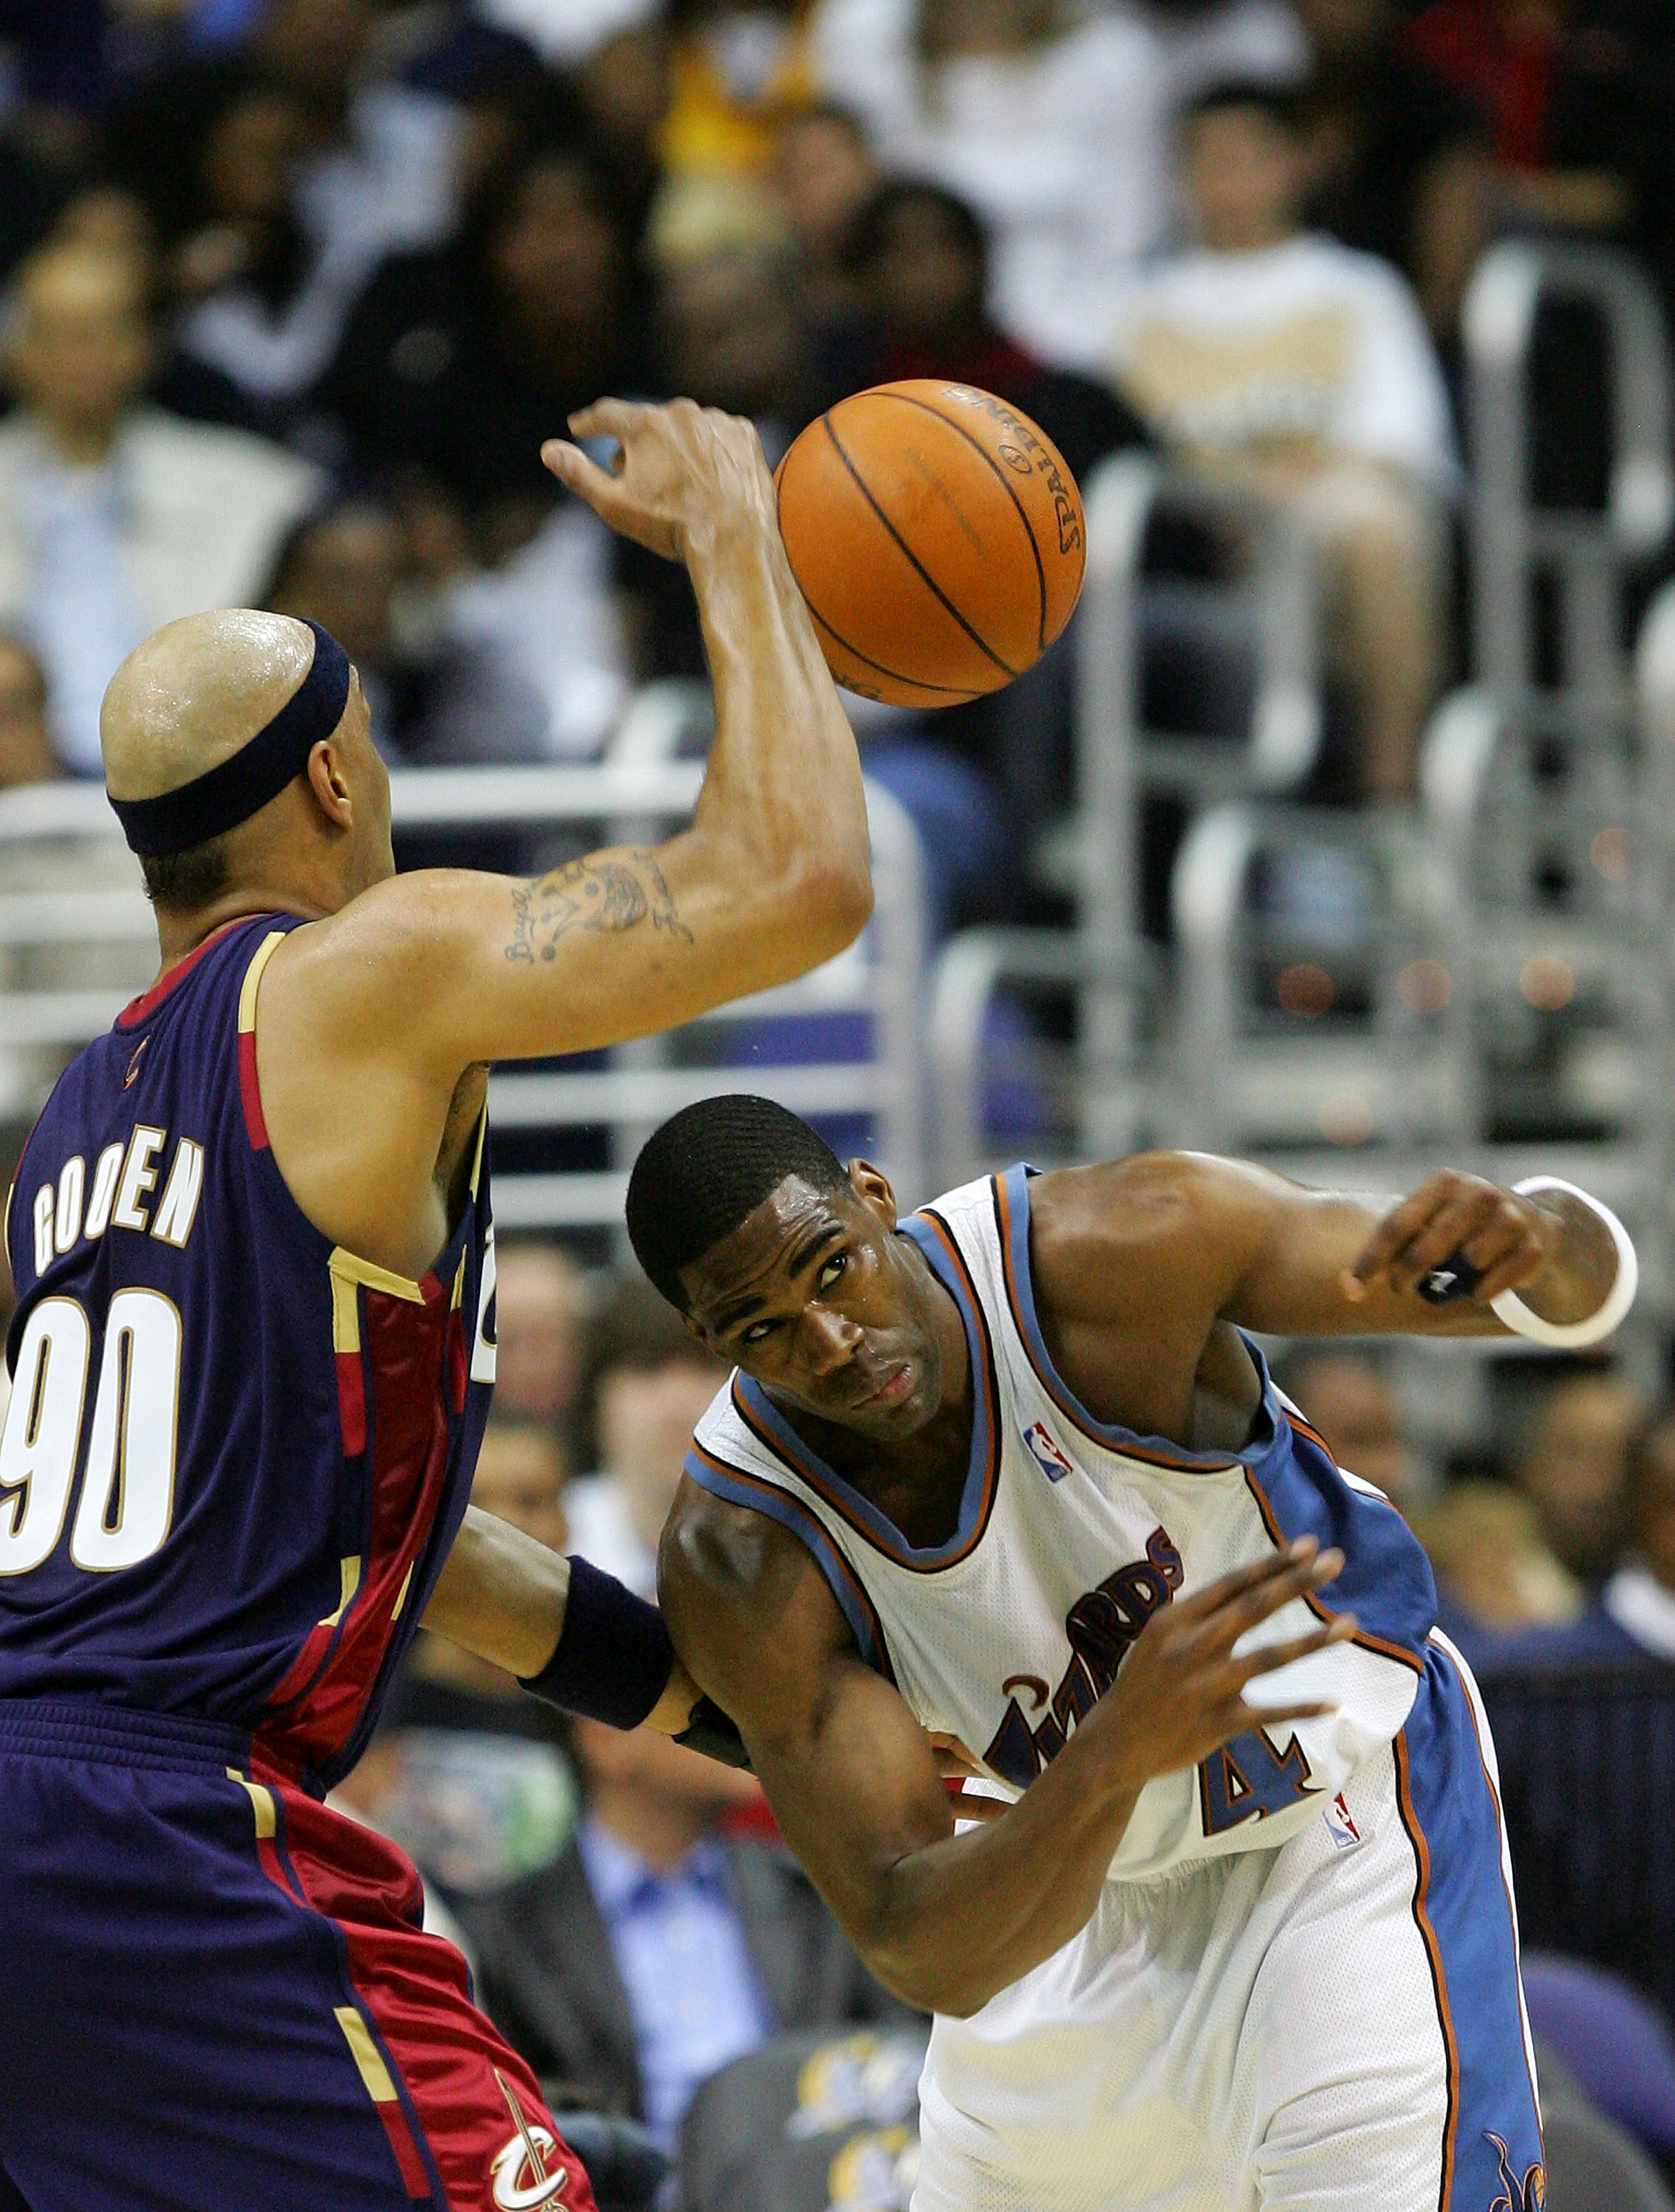 Bleacher Report on X: If NBA stars had Dennis Rodman-style hair